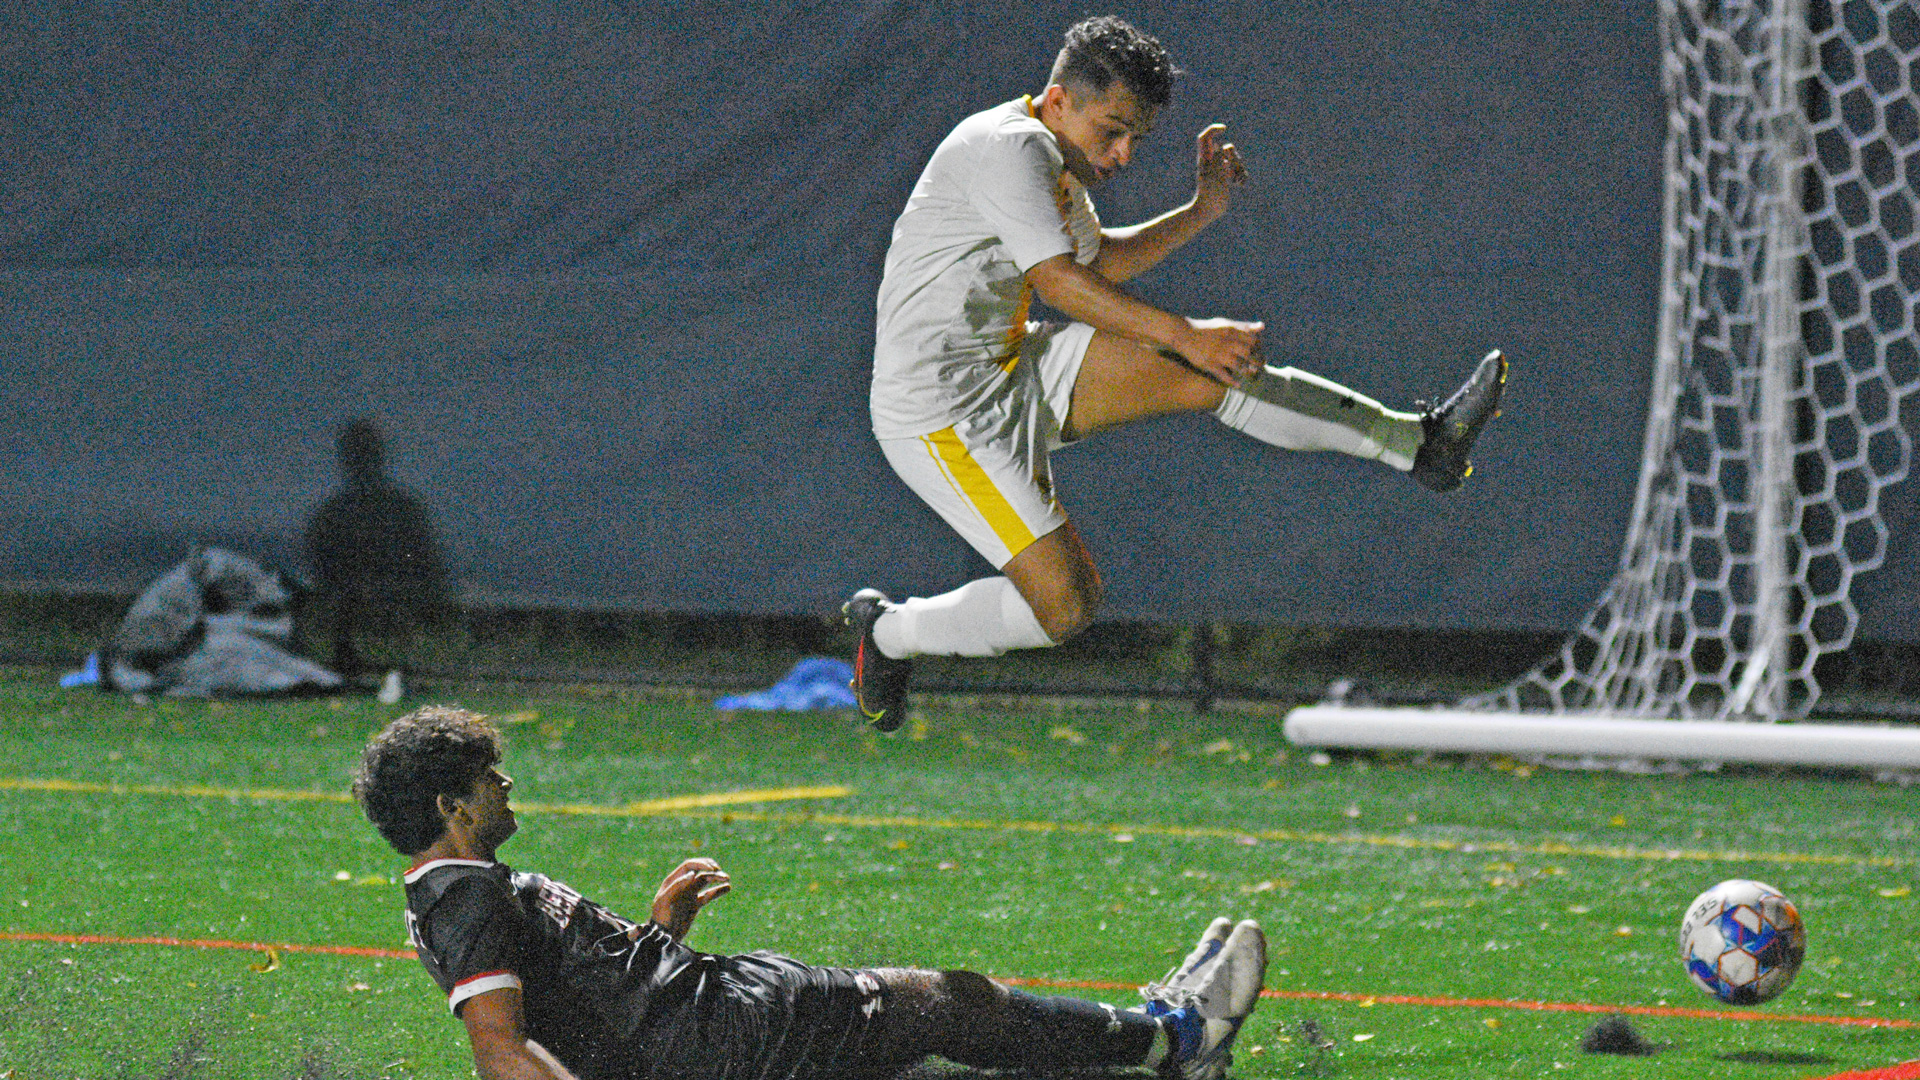 Elvin Carrasco leaping over a sliding defender